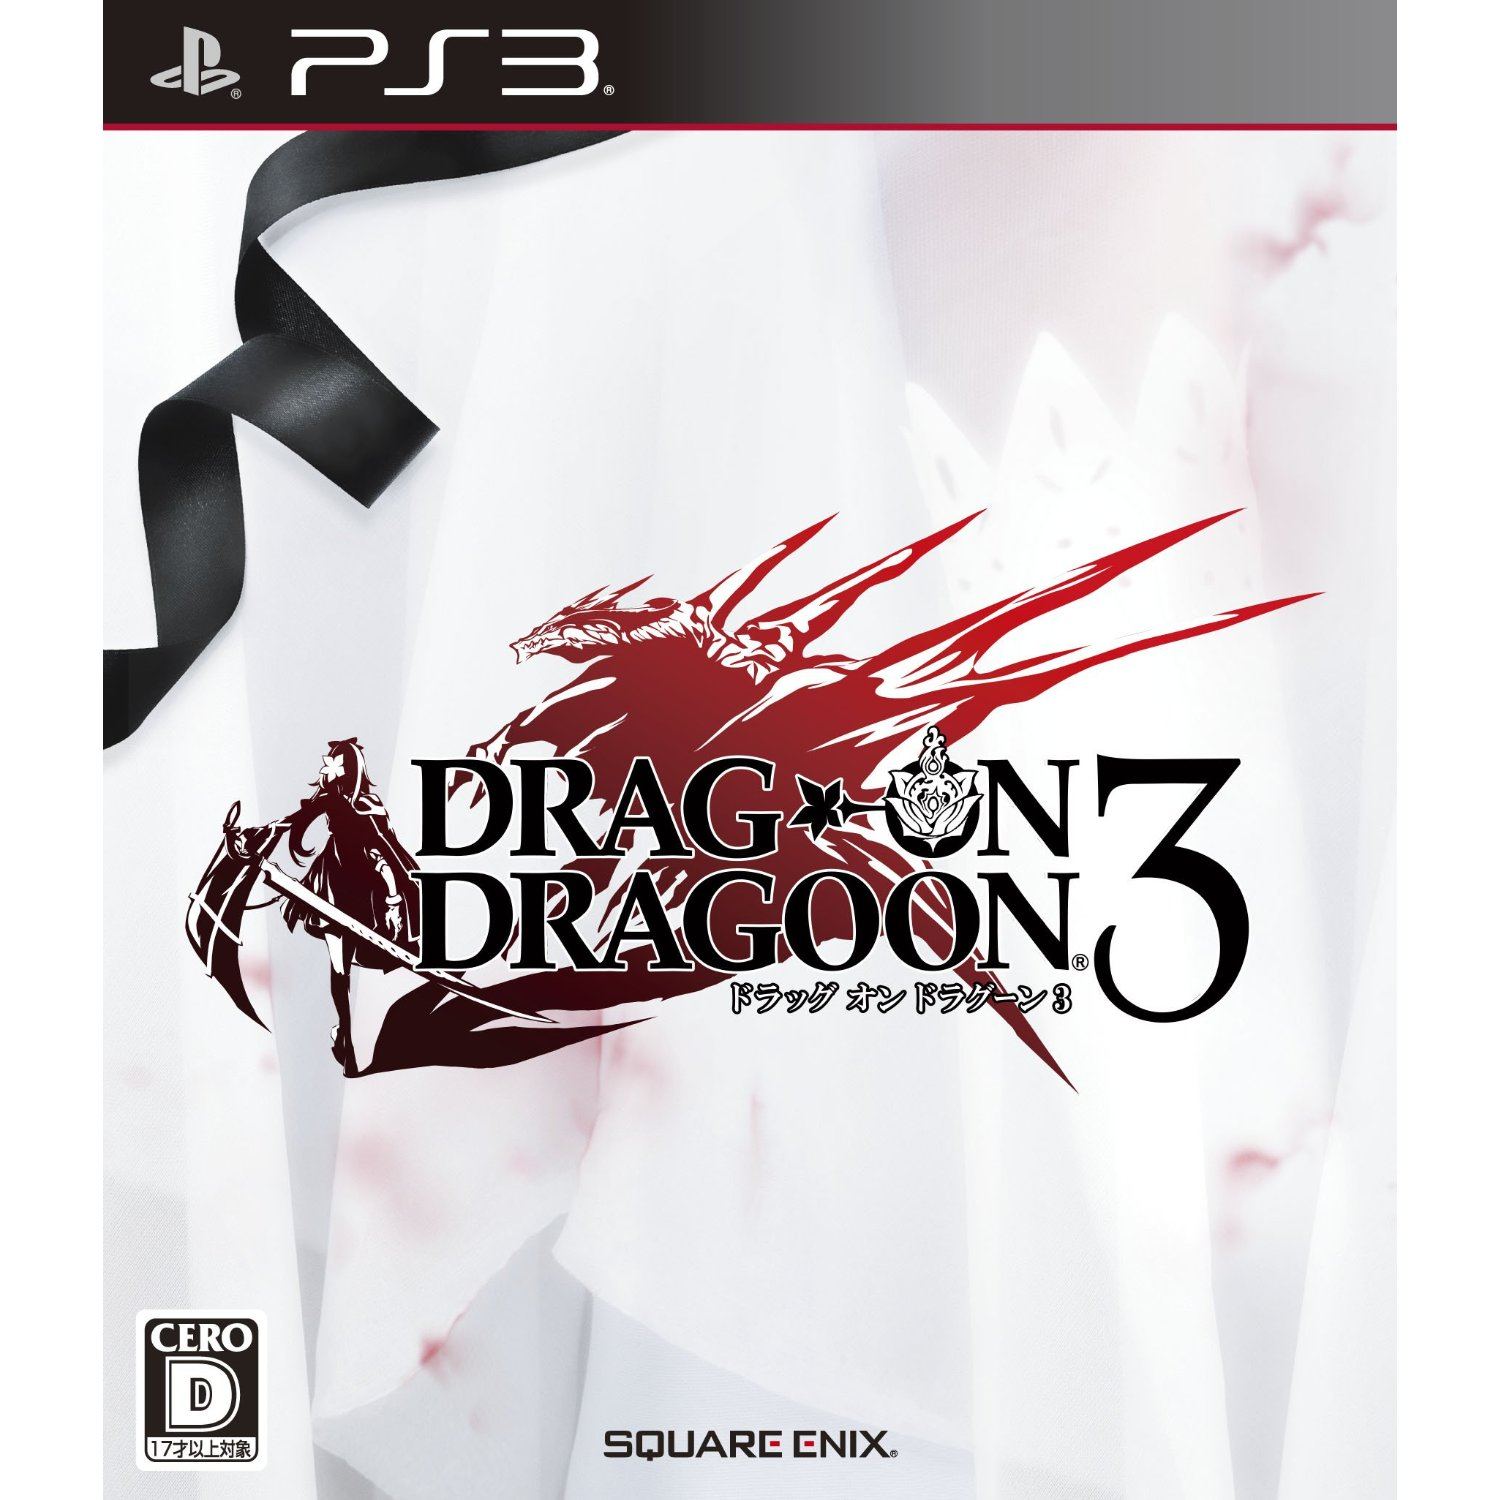 download free dragon dragoon 3